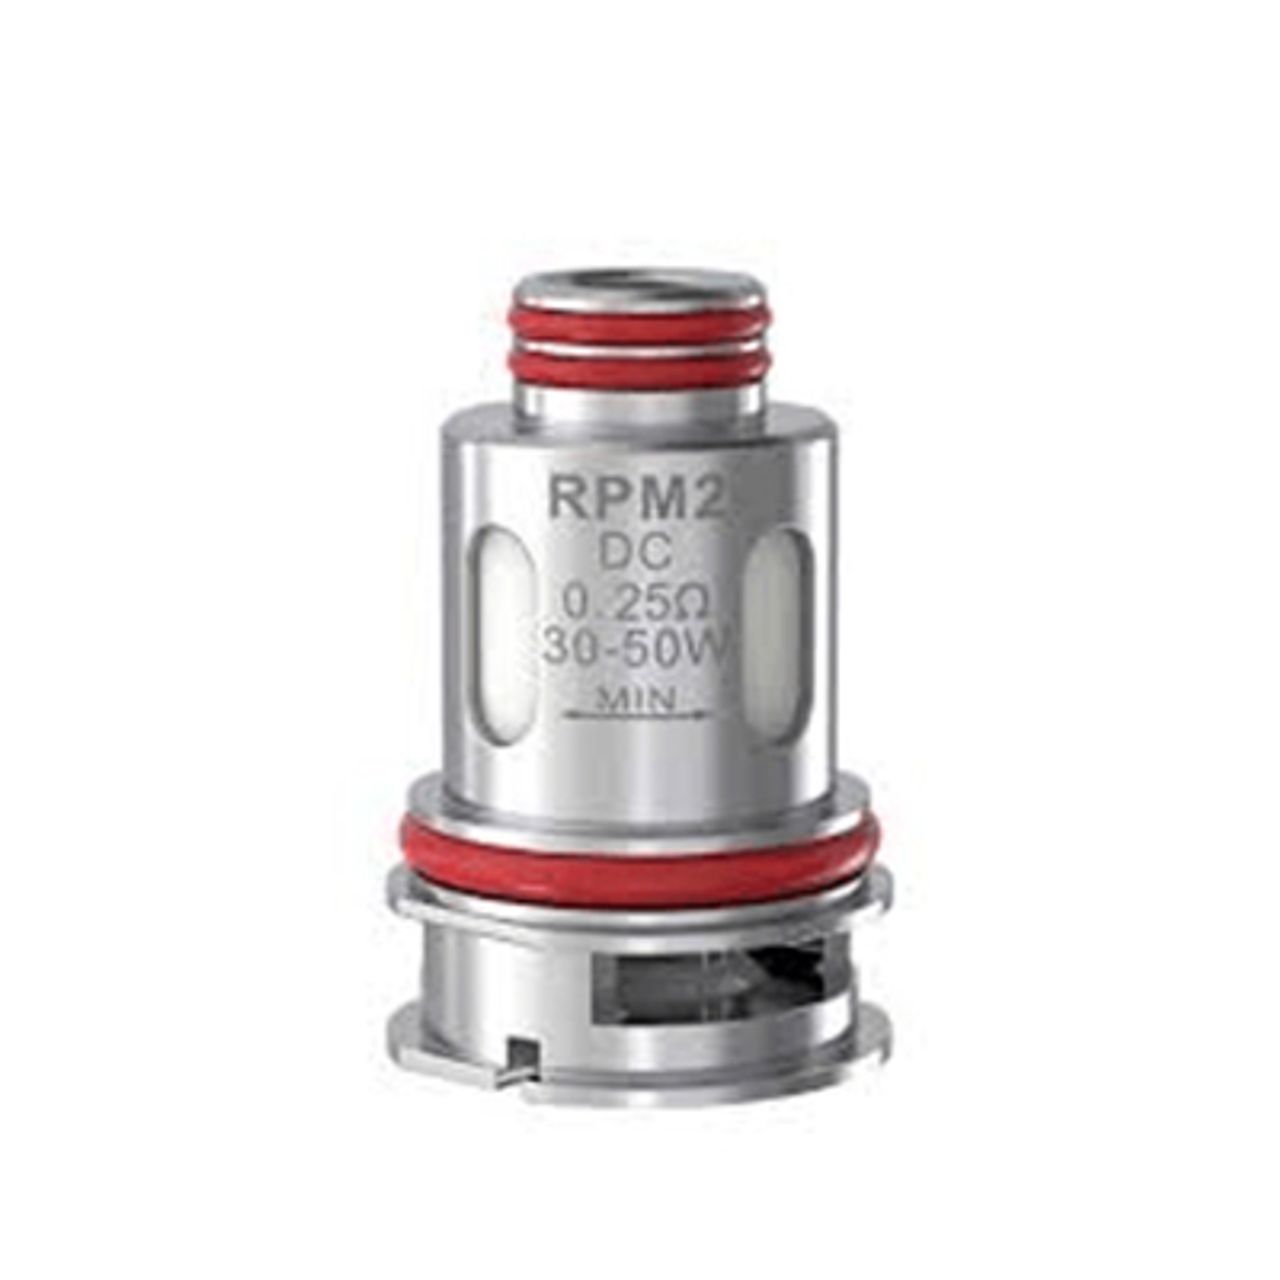 Смок рпм испаритель. Smoke RPM 2 испаритель. Испаритель Smok (rpm2 DC) 0.6 ом. Smok RPM 2 Coil DC 0,25ohm. Смок rpm2 Coil.